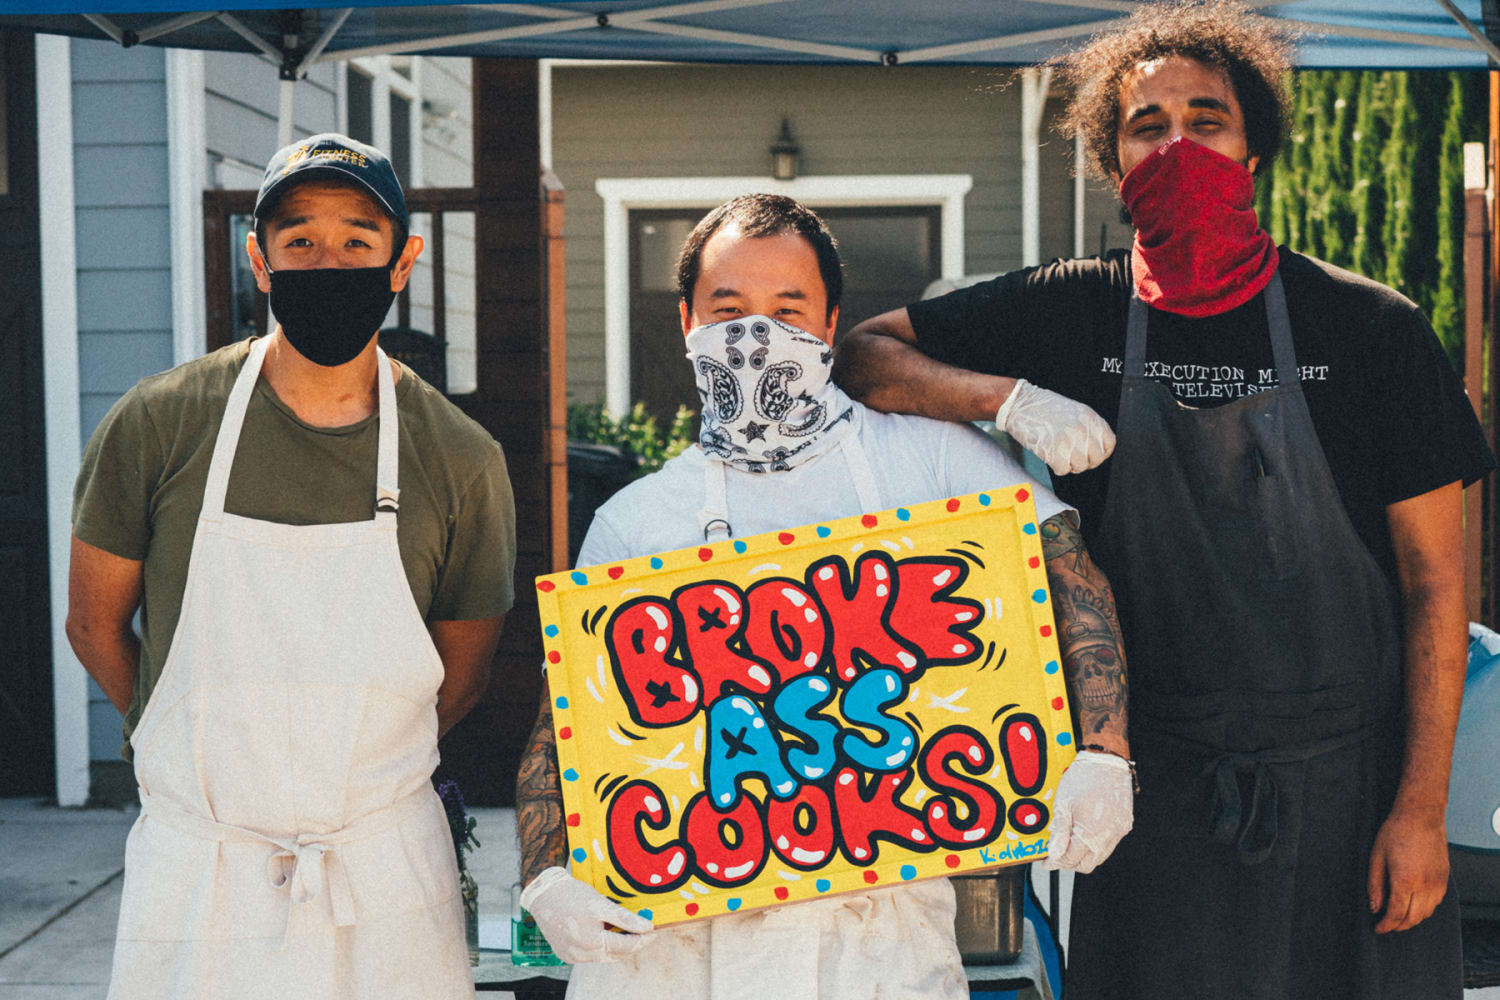 Meet the 'Brokeass Cooks' who started a pop-up in their Oakland backyard